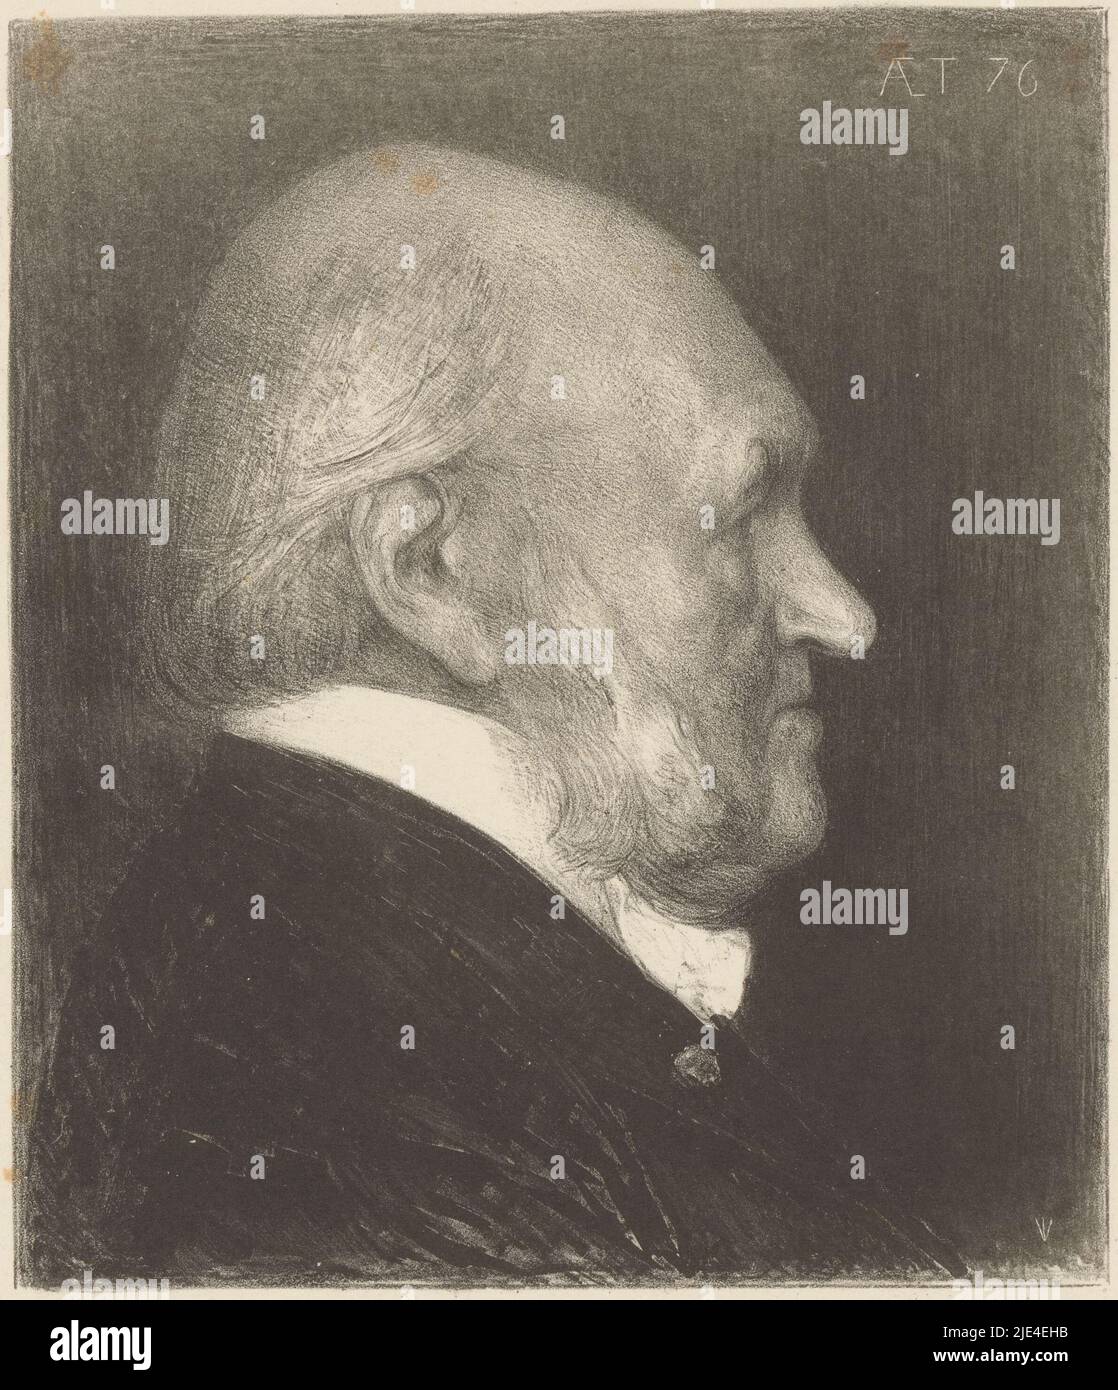 Porträt der Nicolaas Beets, Jan Veth, 1891, Druckerei: Jan Veth, (auf Objekt erwähnt), 1891, Papier, H 383 mm × B 330 mm, FTZYC Doctype Stockfoto